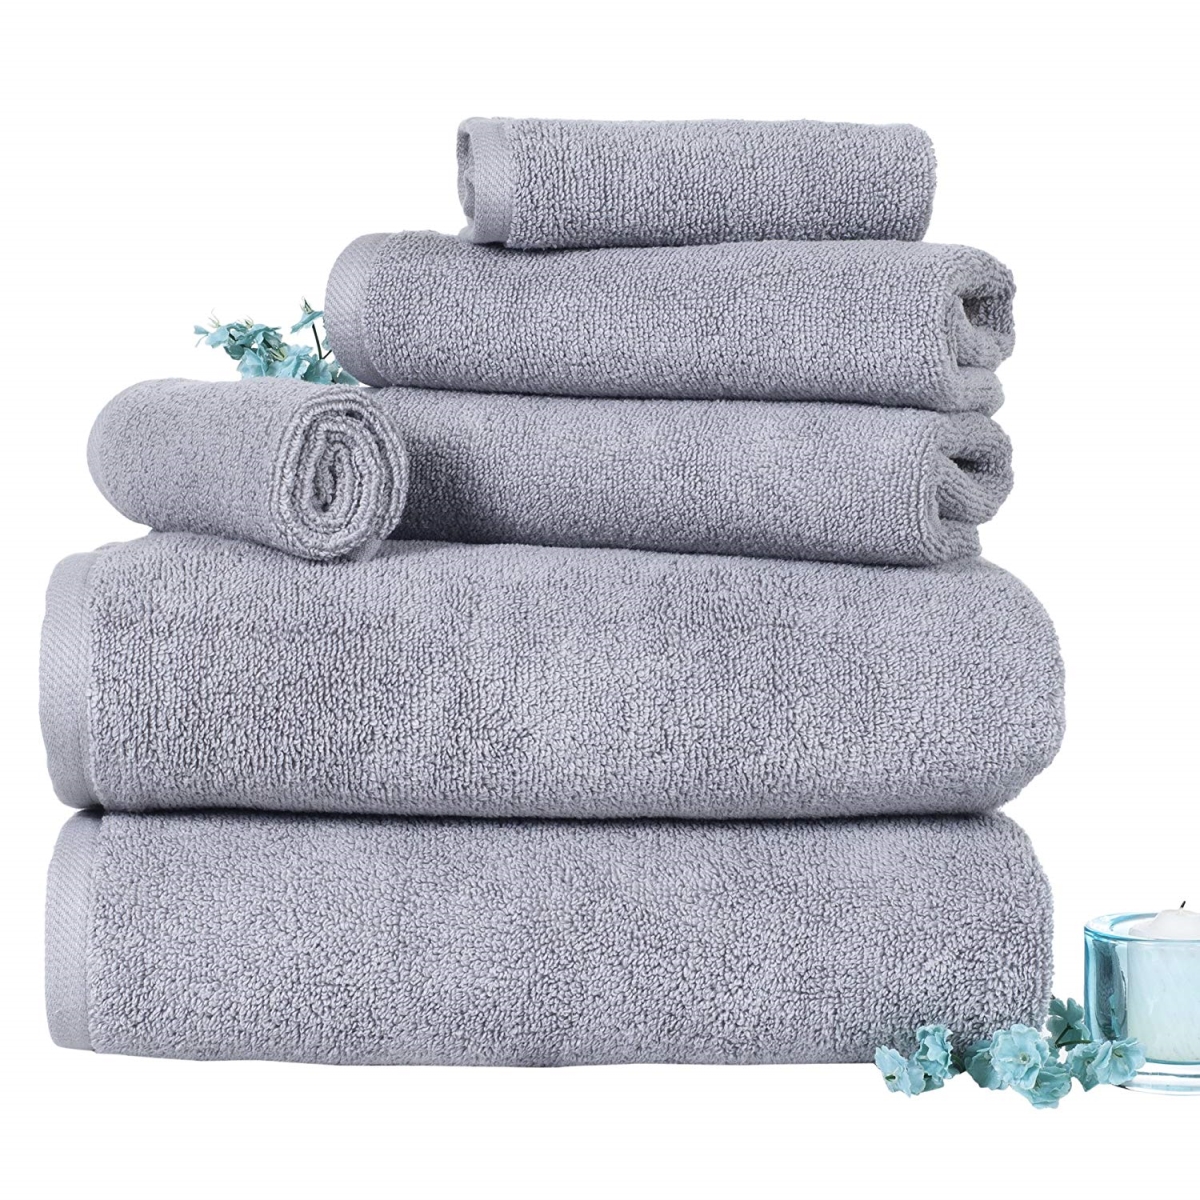 67a-77255 100 Percent Cotton Zero Twist 6 Piece Towel Set - Silver